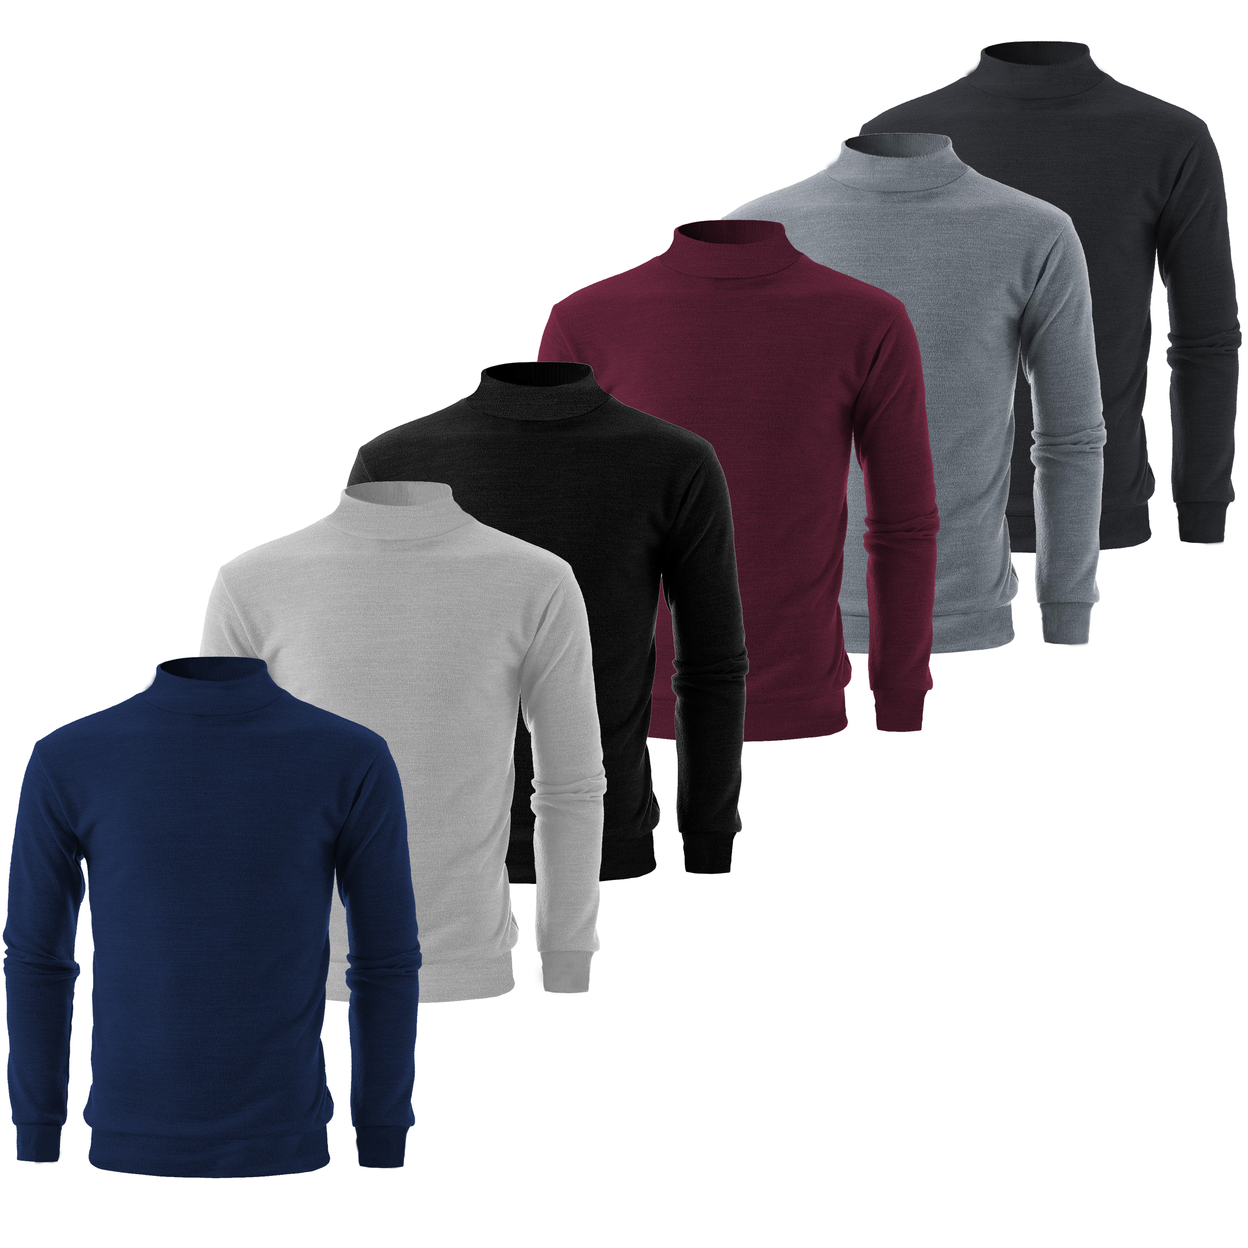 Multi-Pack: Men's Winter Warm Cozy Knit Slim Fit Mock Neck Sweater - 1-pack, Large